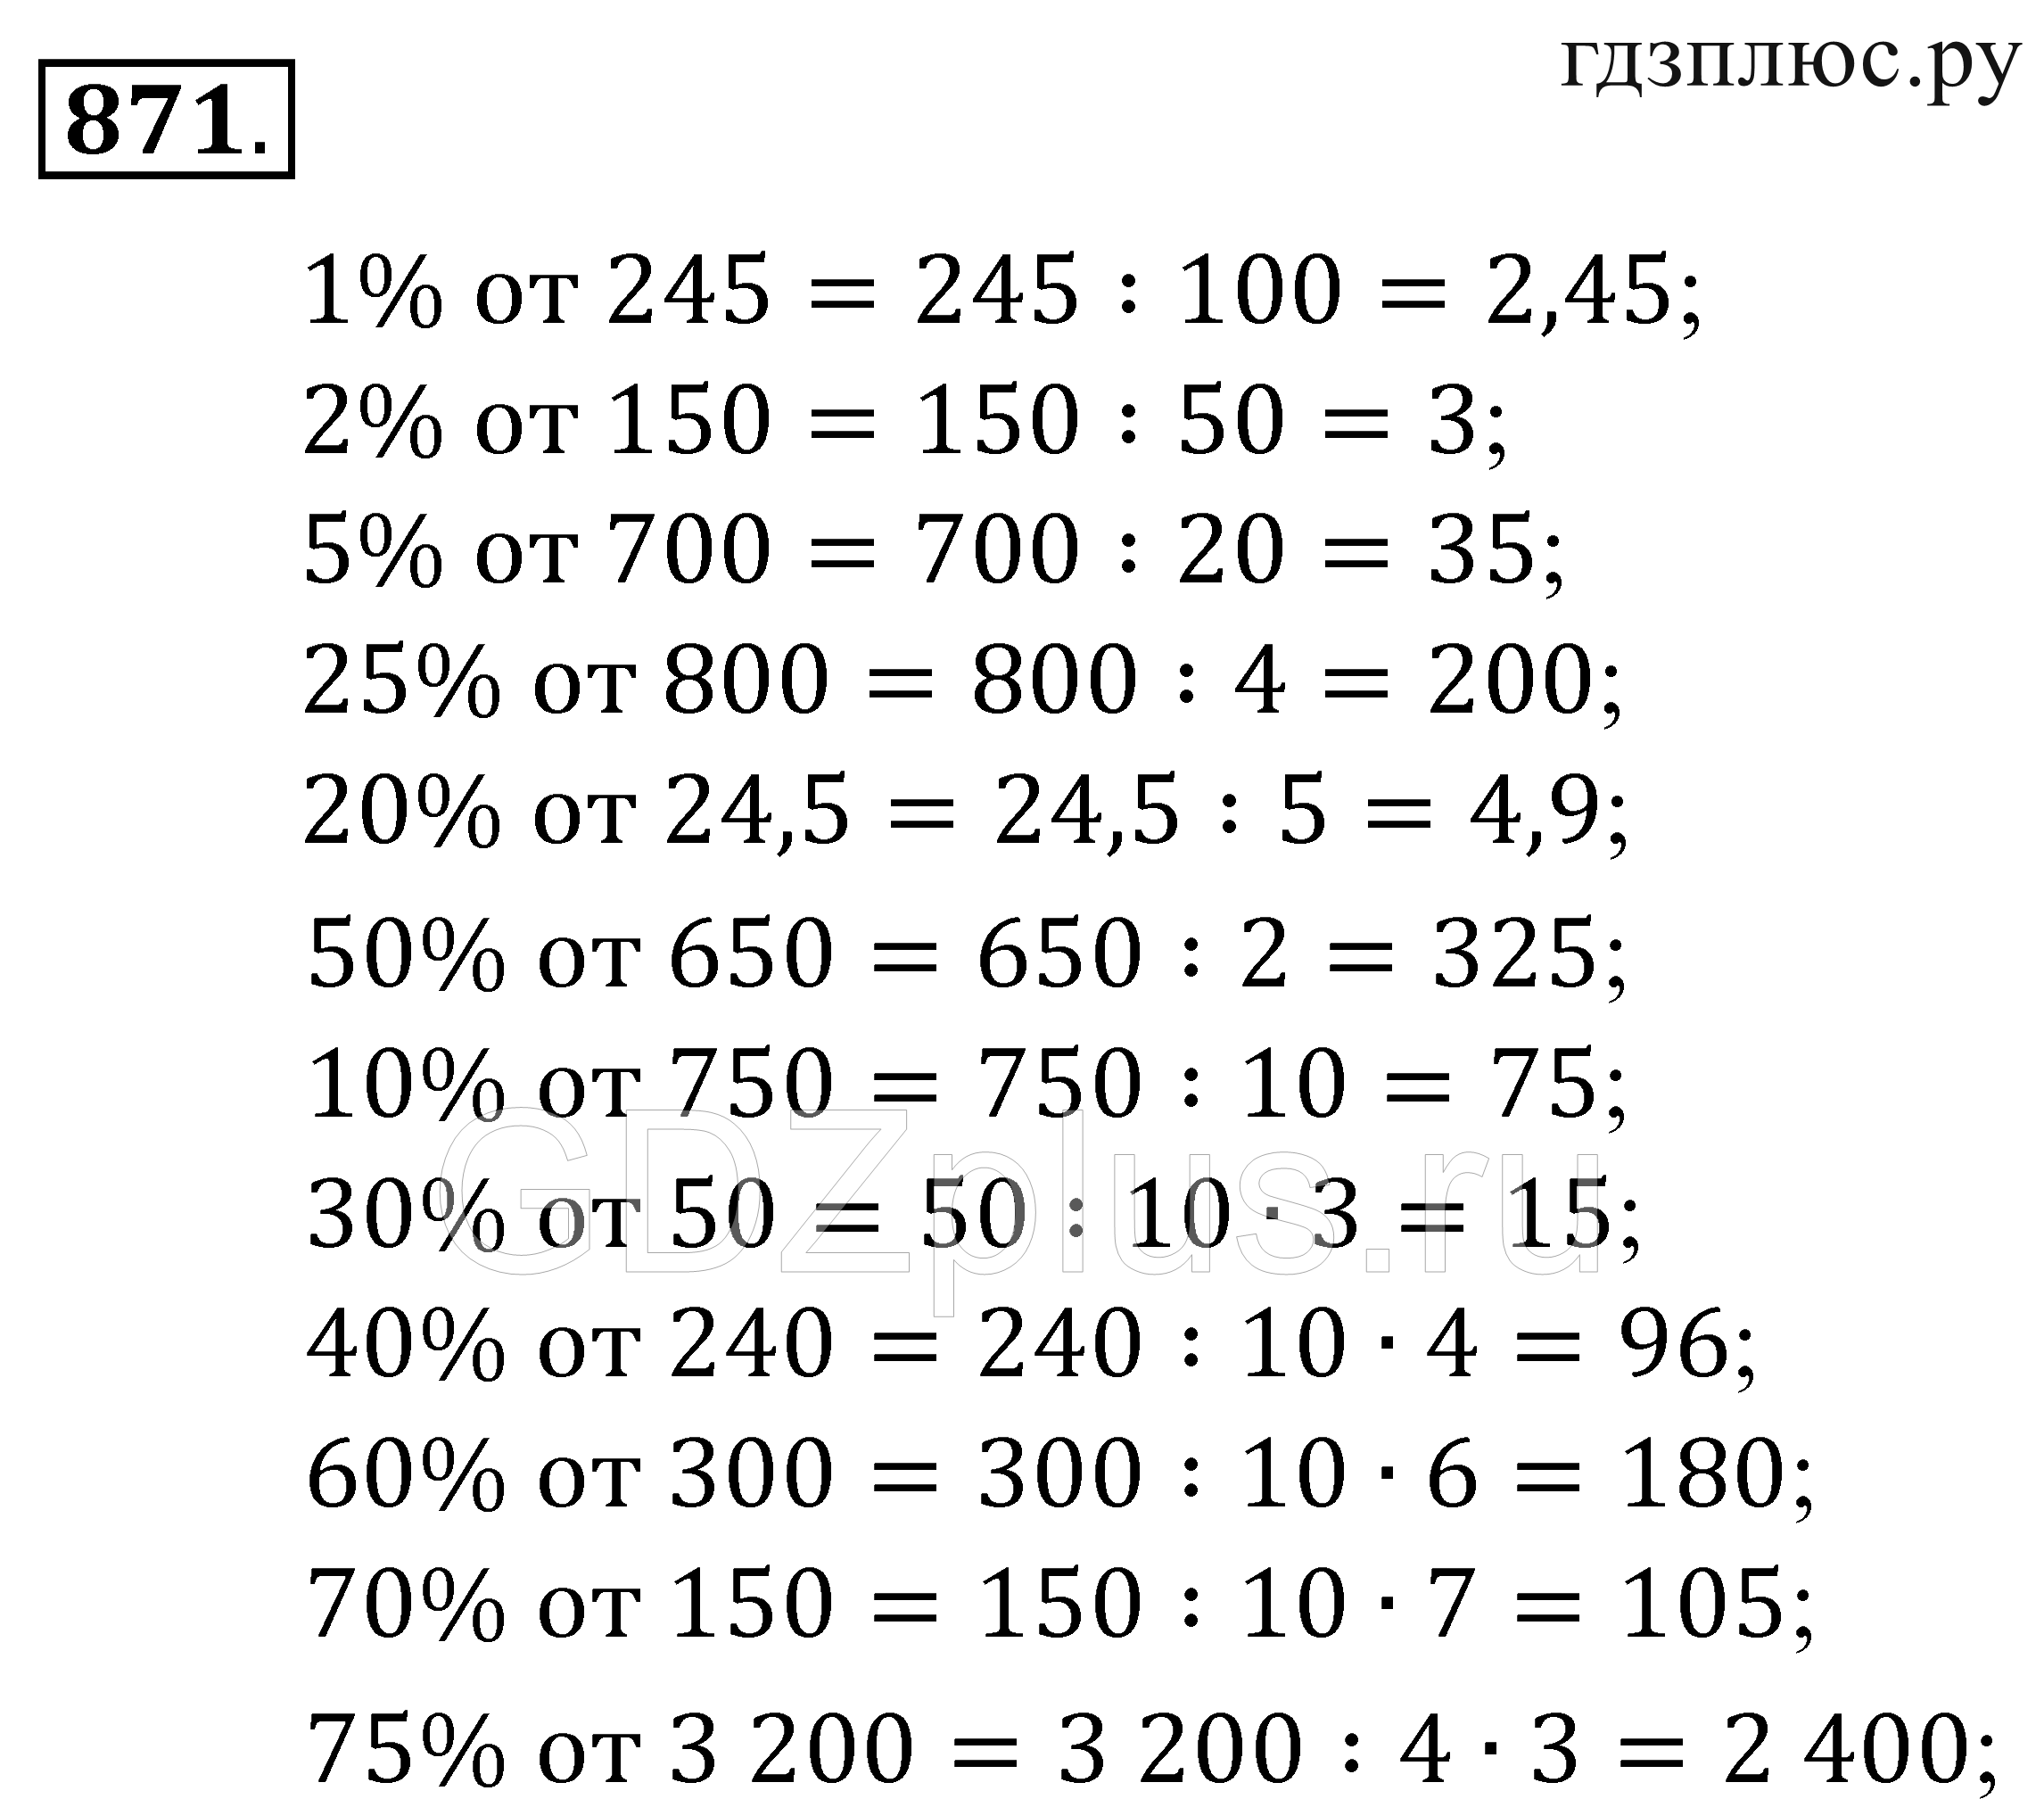 Математика 5 сборник решений. Проценты математика 5 класс примеры. Примеры с процентами. Примеры на проценты 6 класс. Примеры на проценты 5 класс.